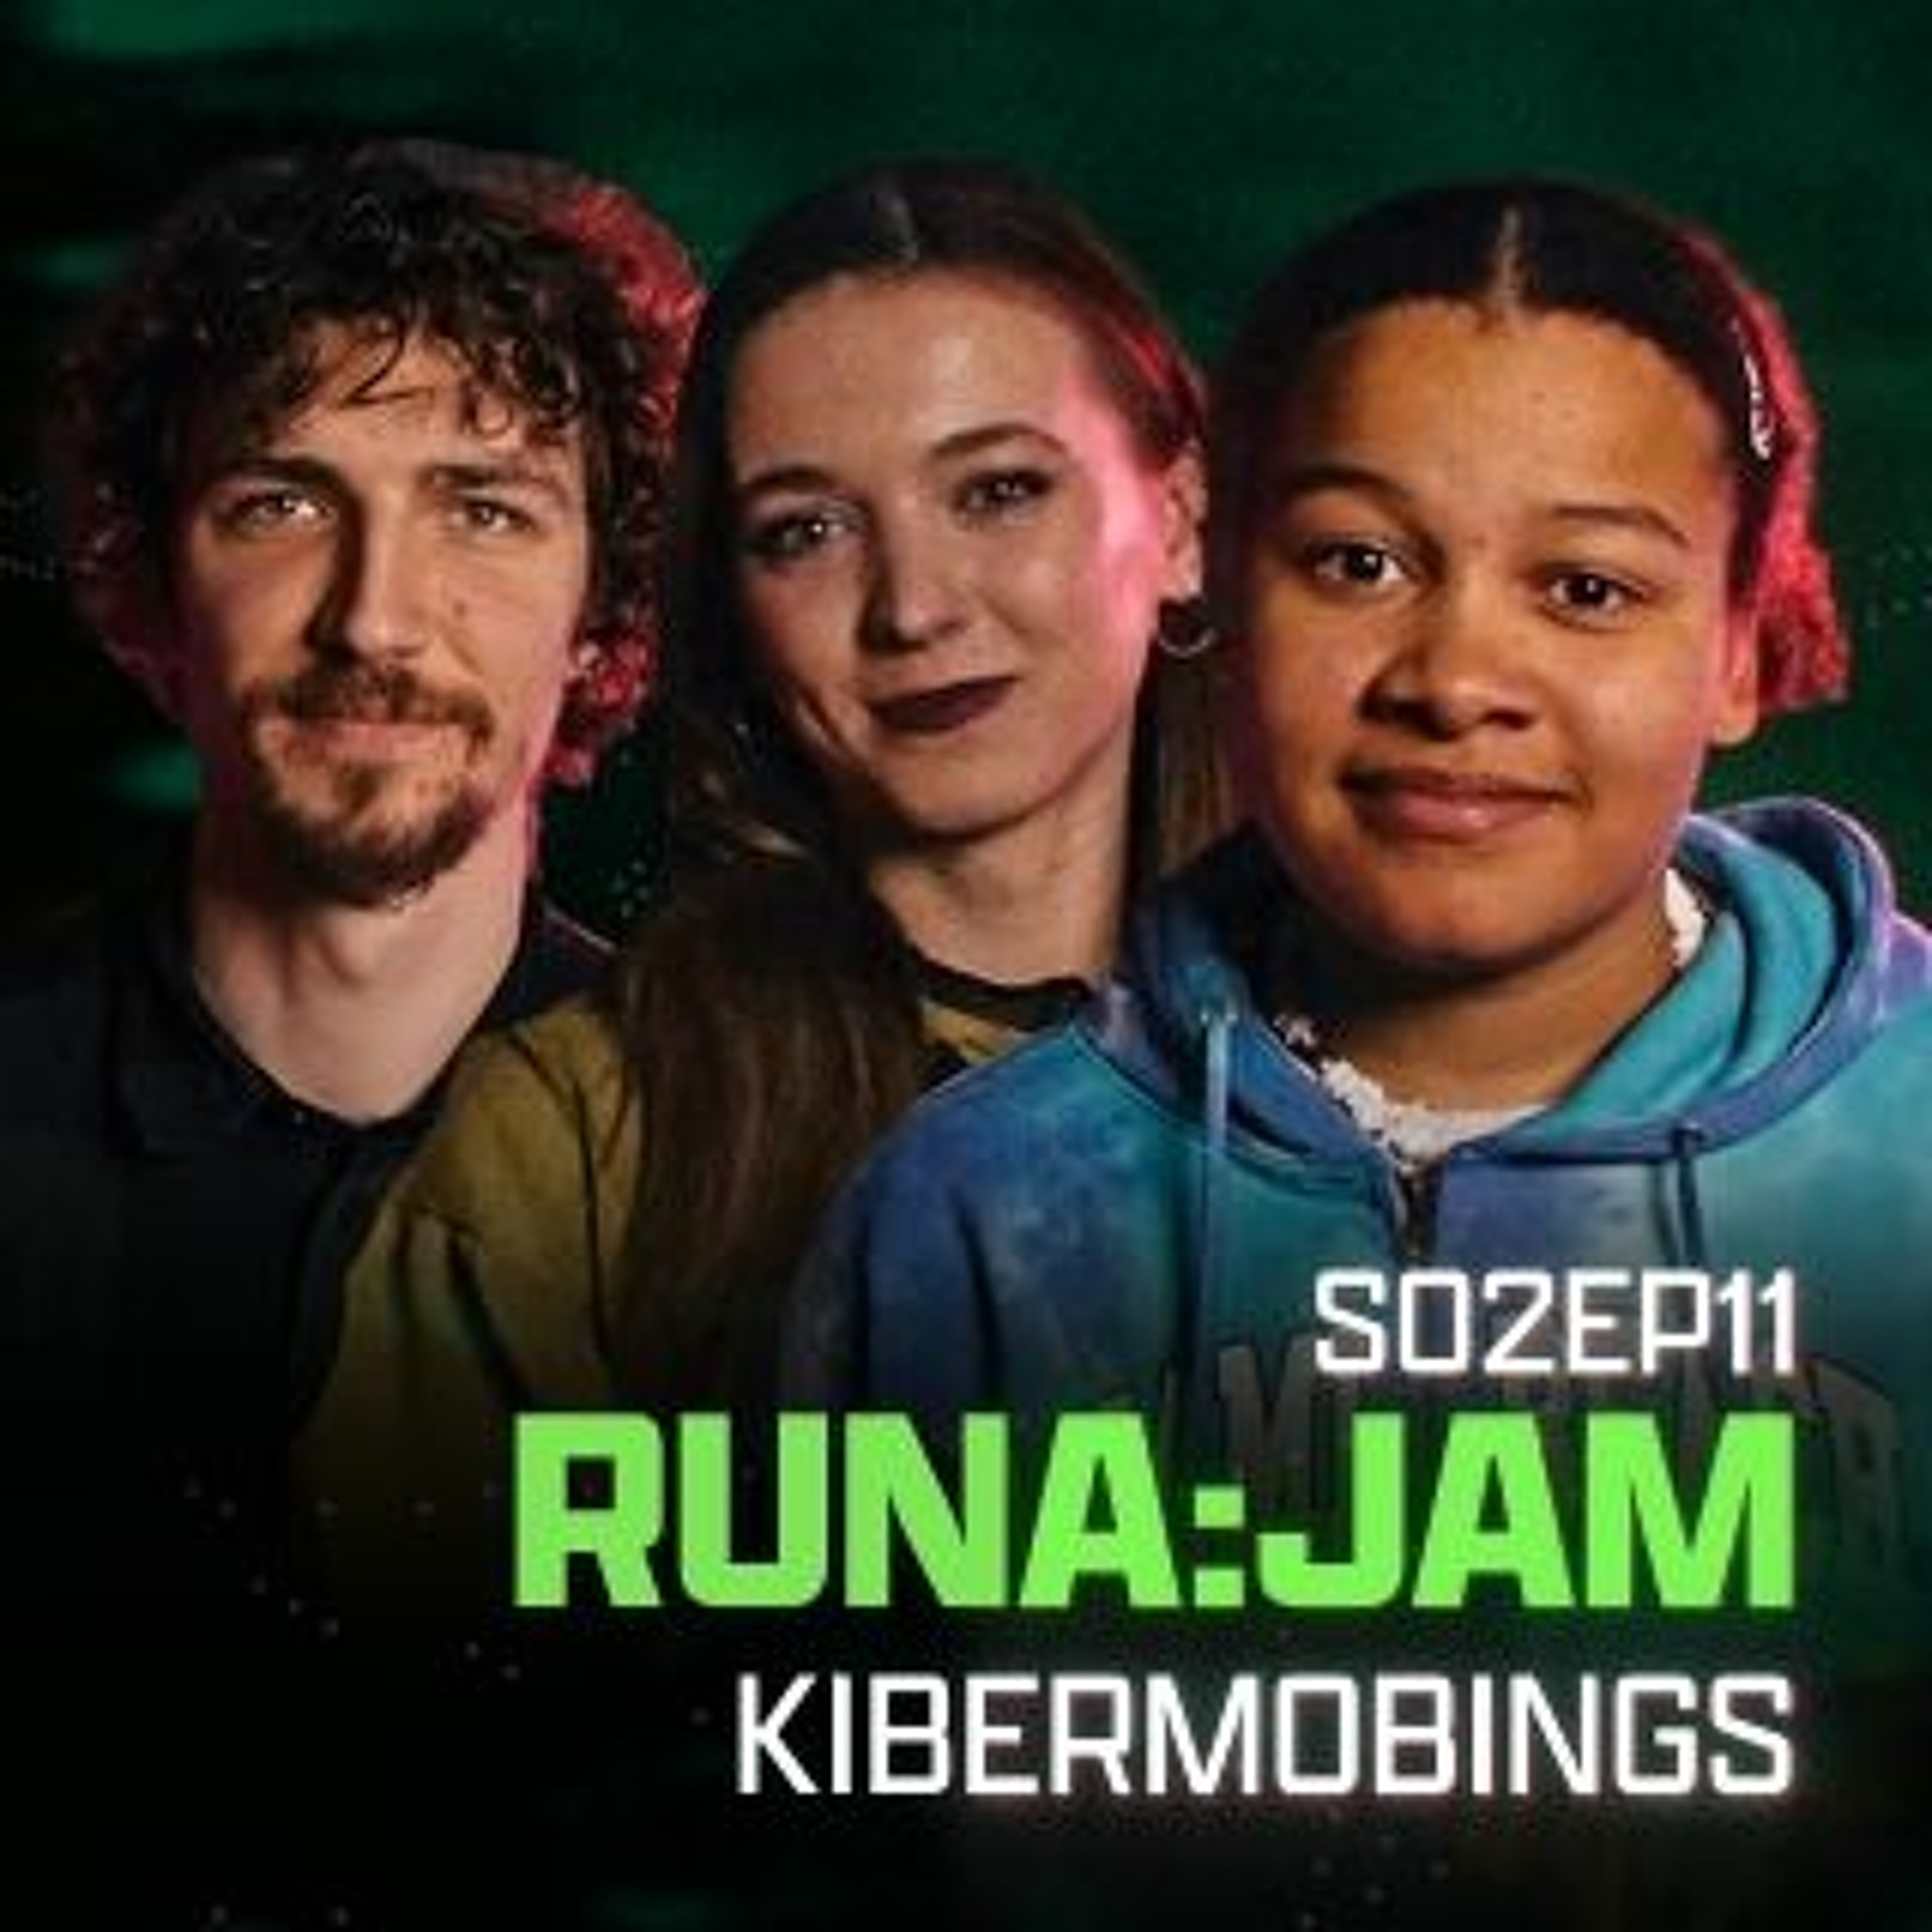 Kibermobings I RUNA:JAM! S02EP11